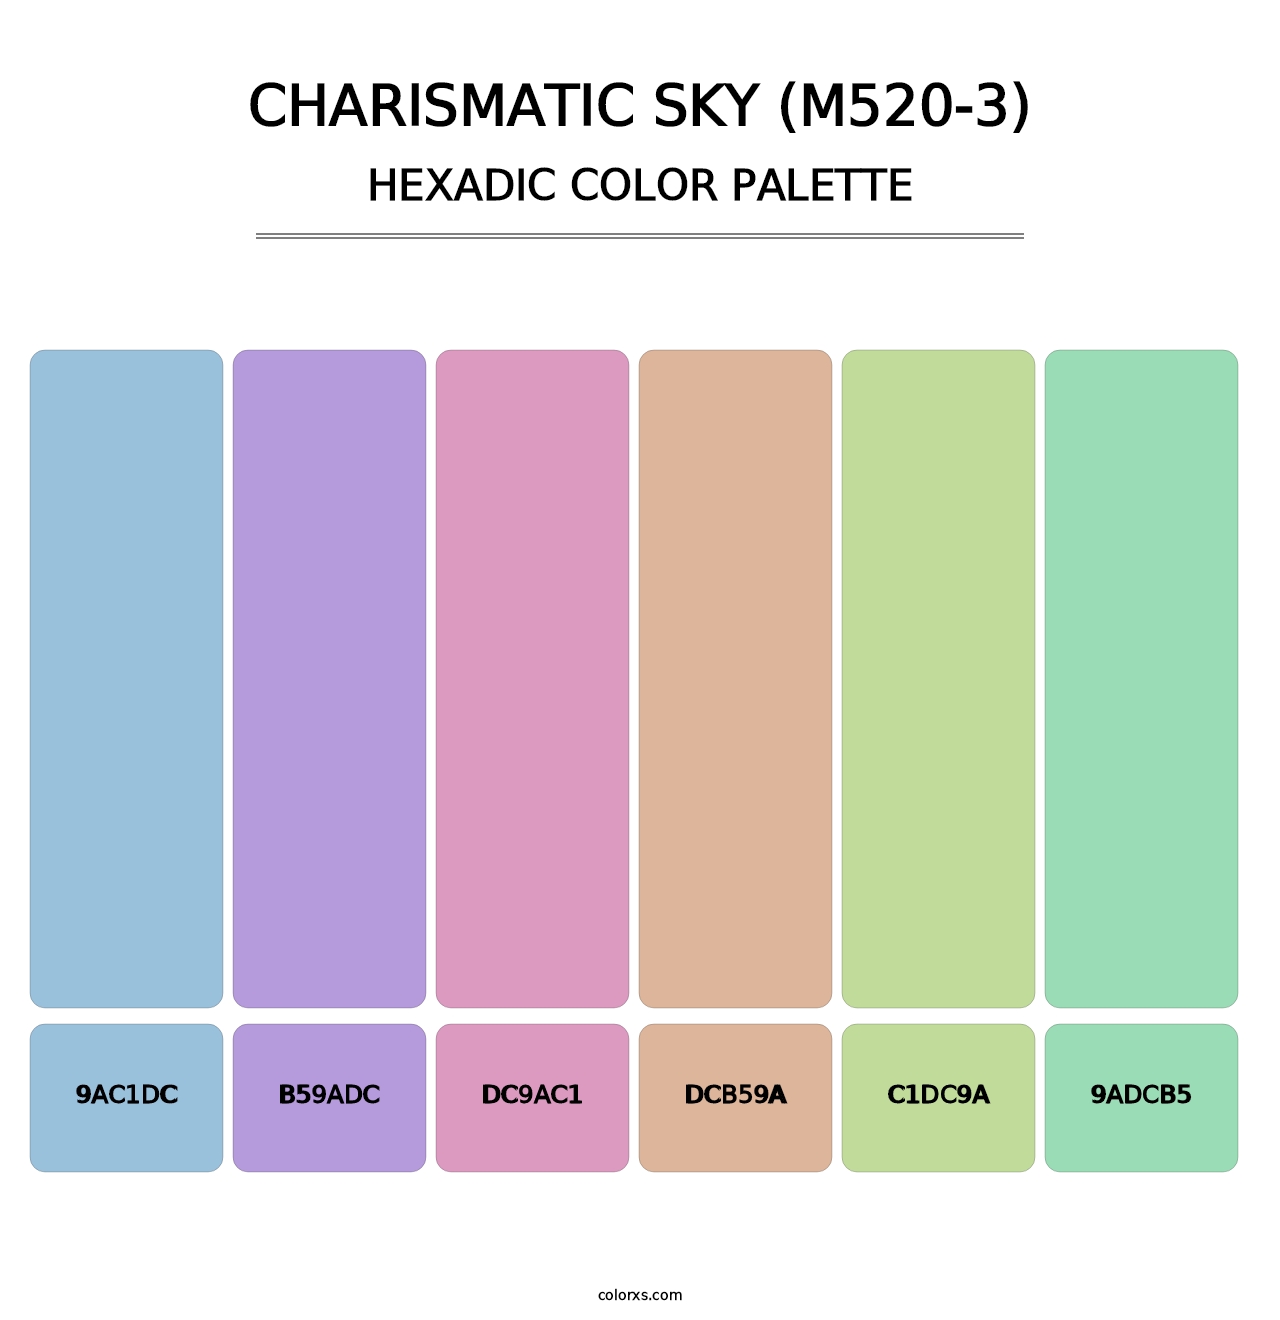 Charismatic Sky (M520-3) - Hexadic Color Palette